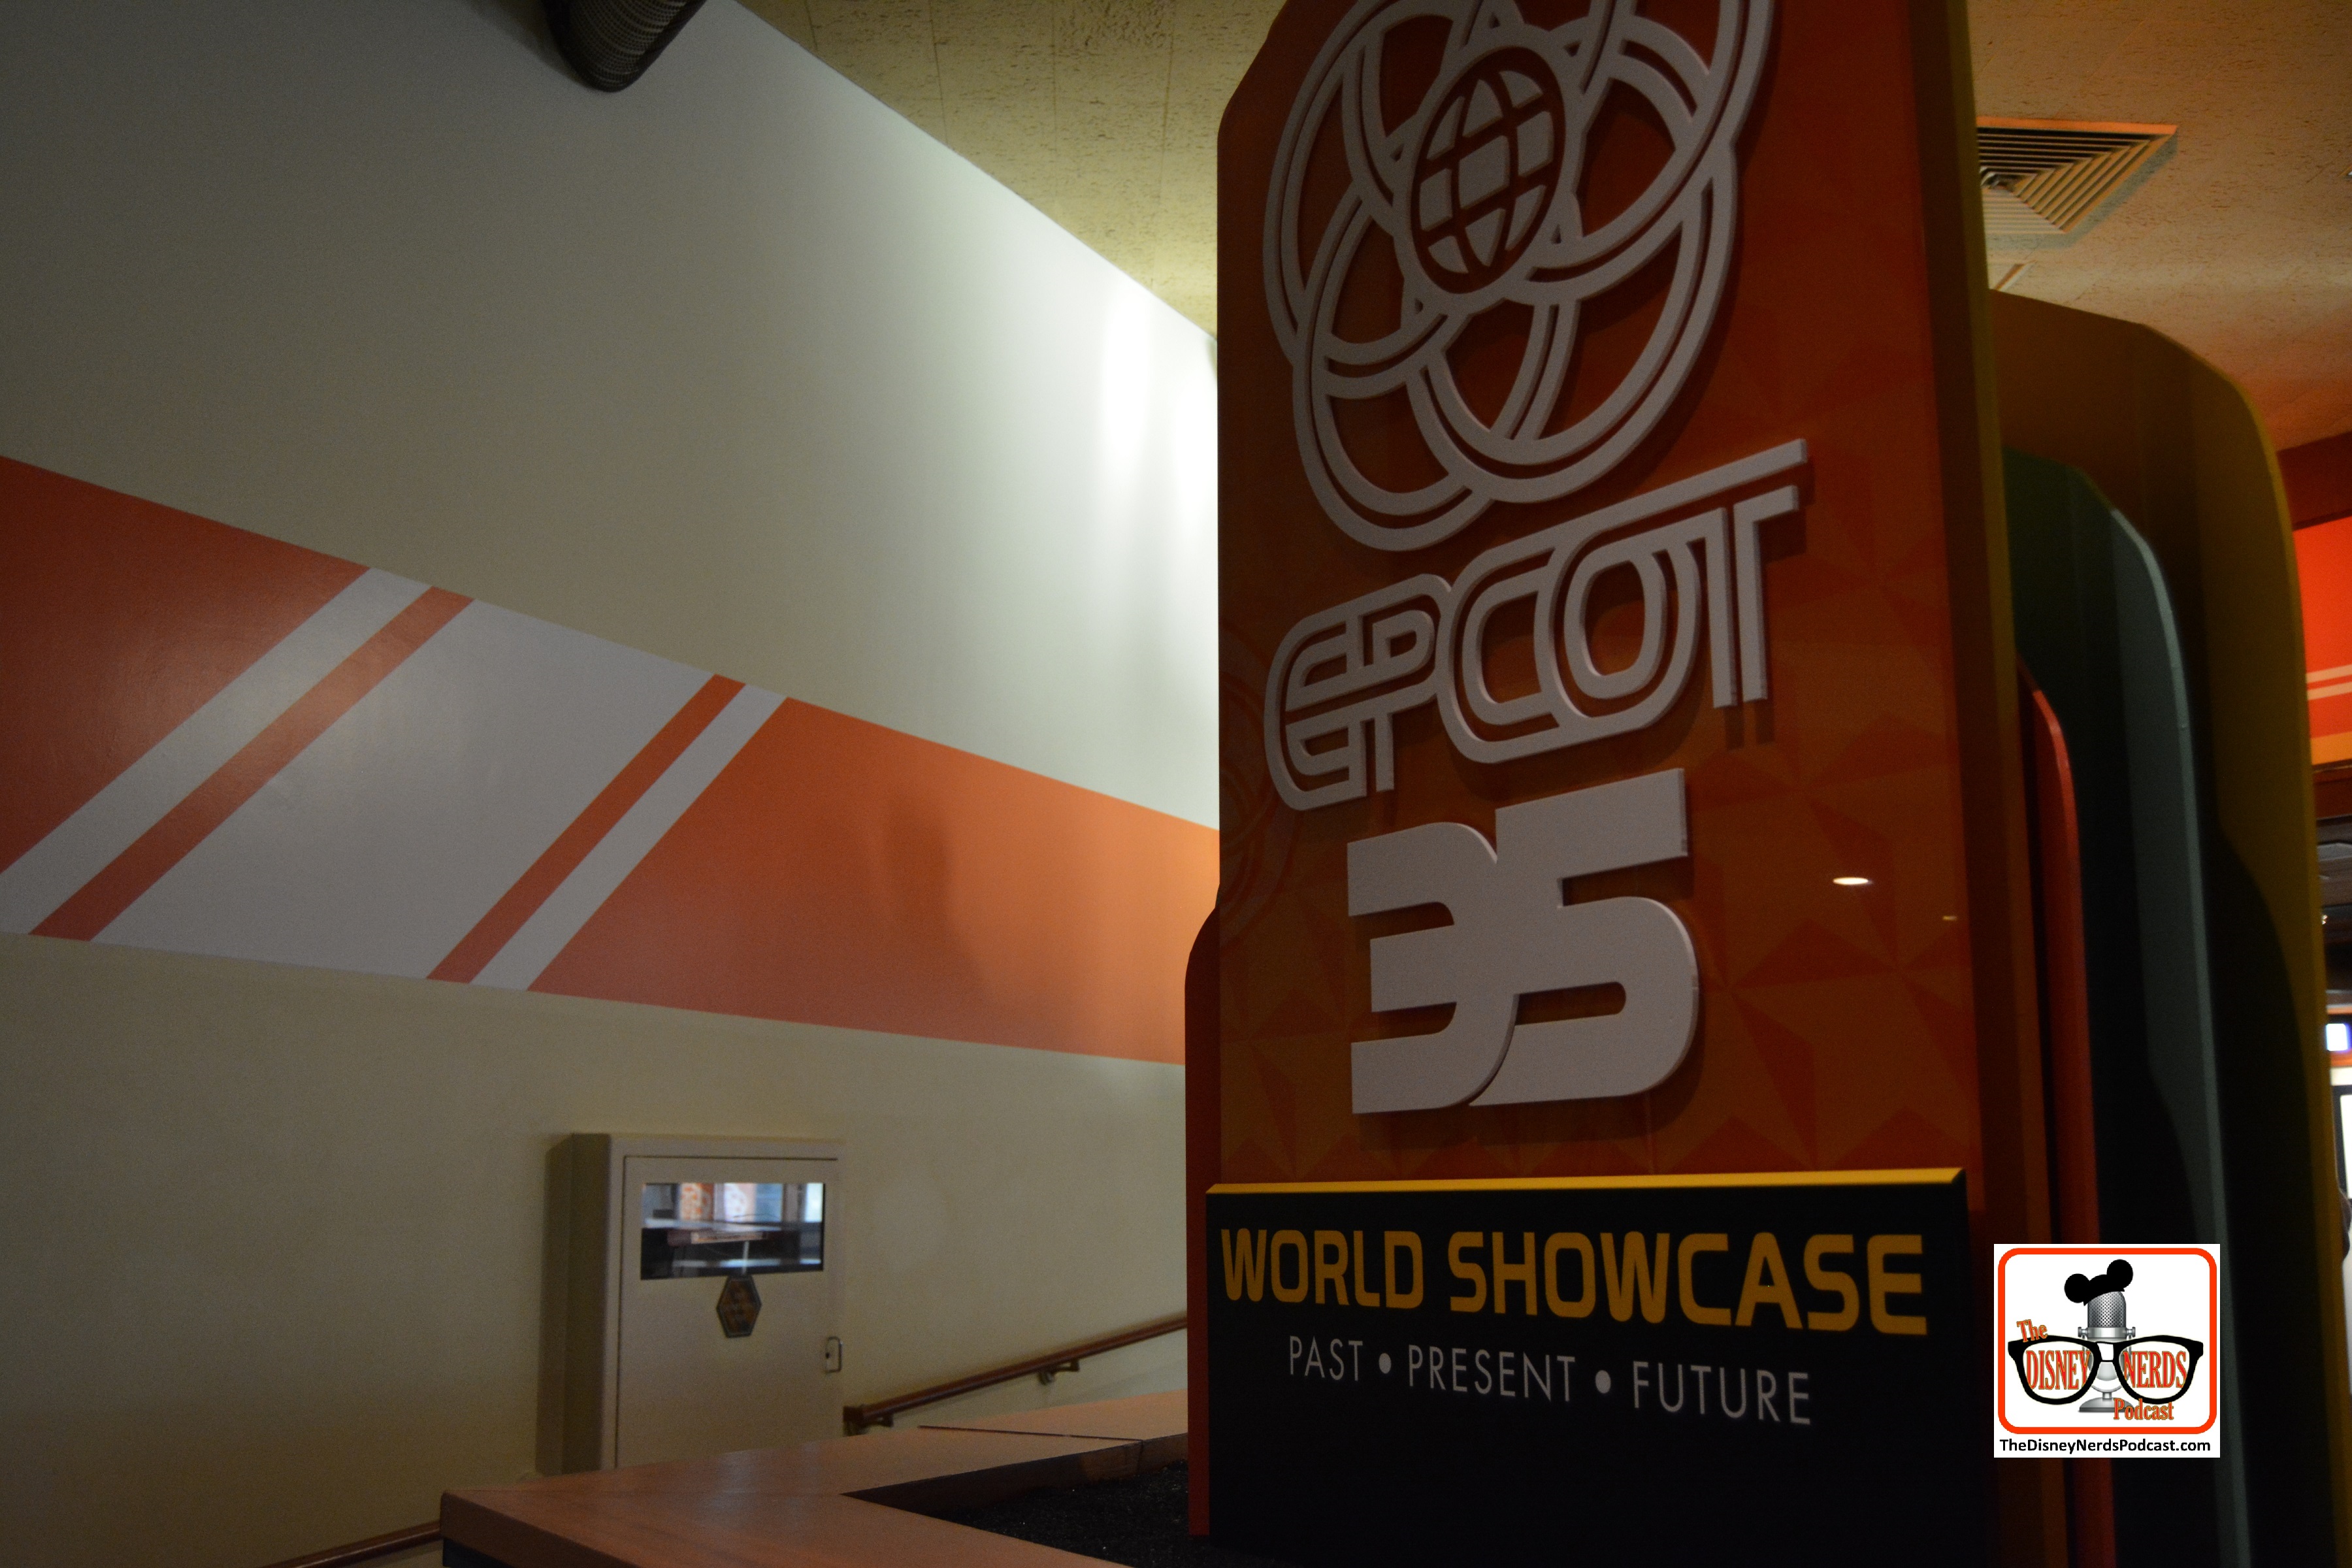 Epcot Legacy Showplace - Future World Showcase #Epcot35